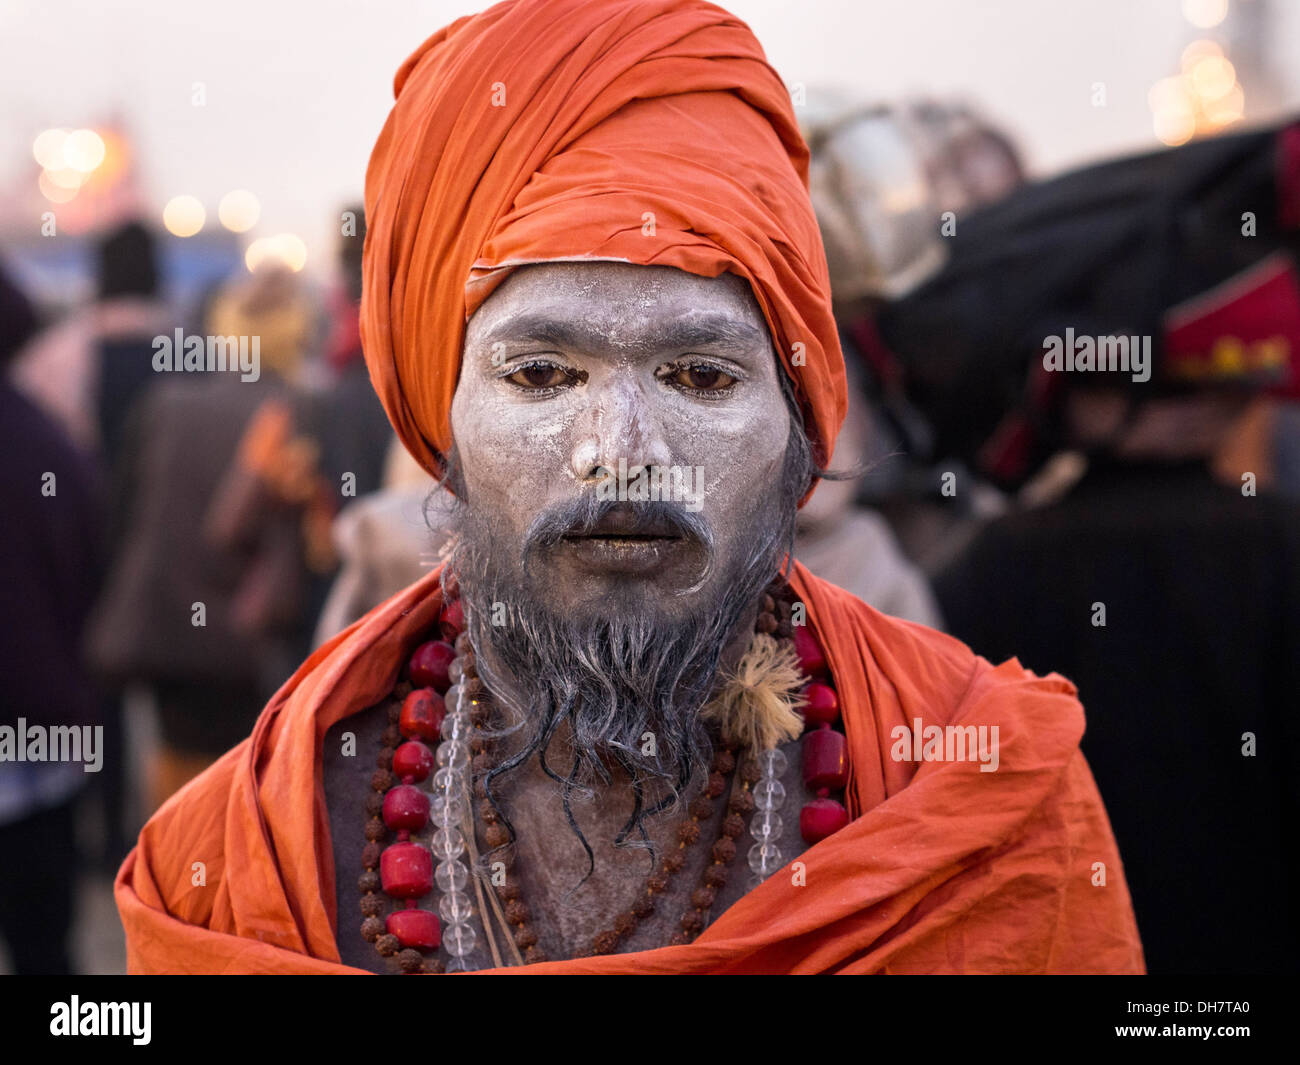 Robe Orange sadhu Kumbh Mela indien en 2013, le plus grand festival religieux à Allahabad, Inde. Banque D'Images